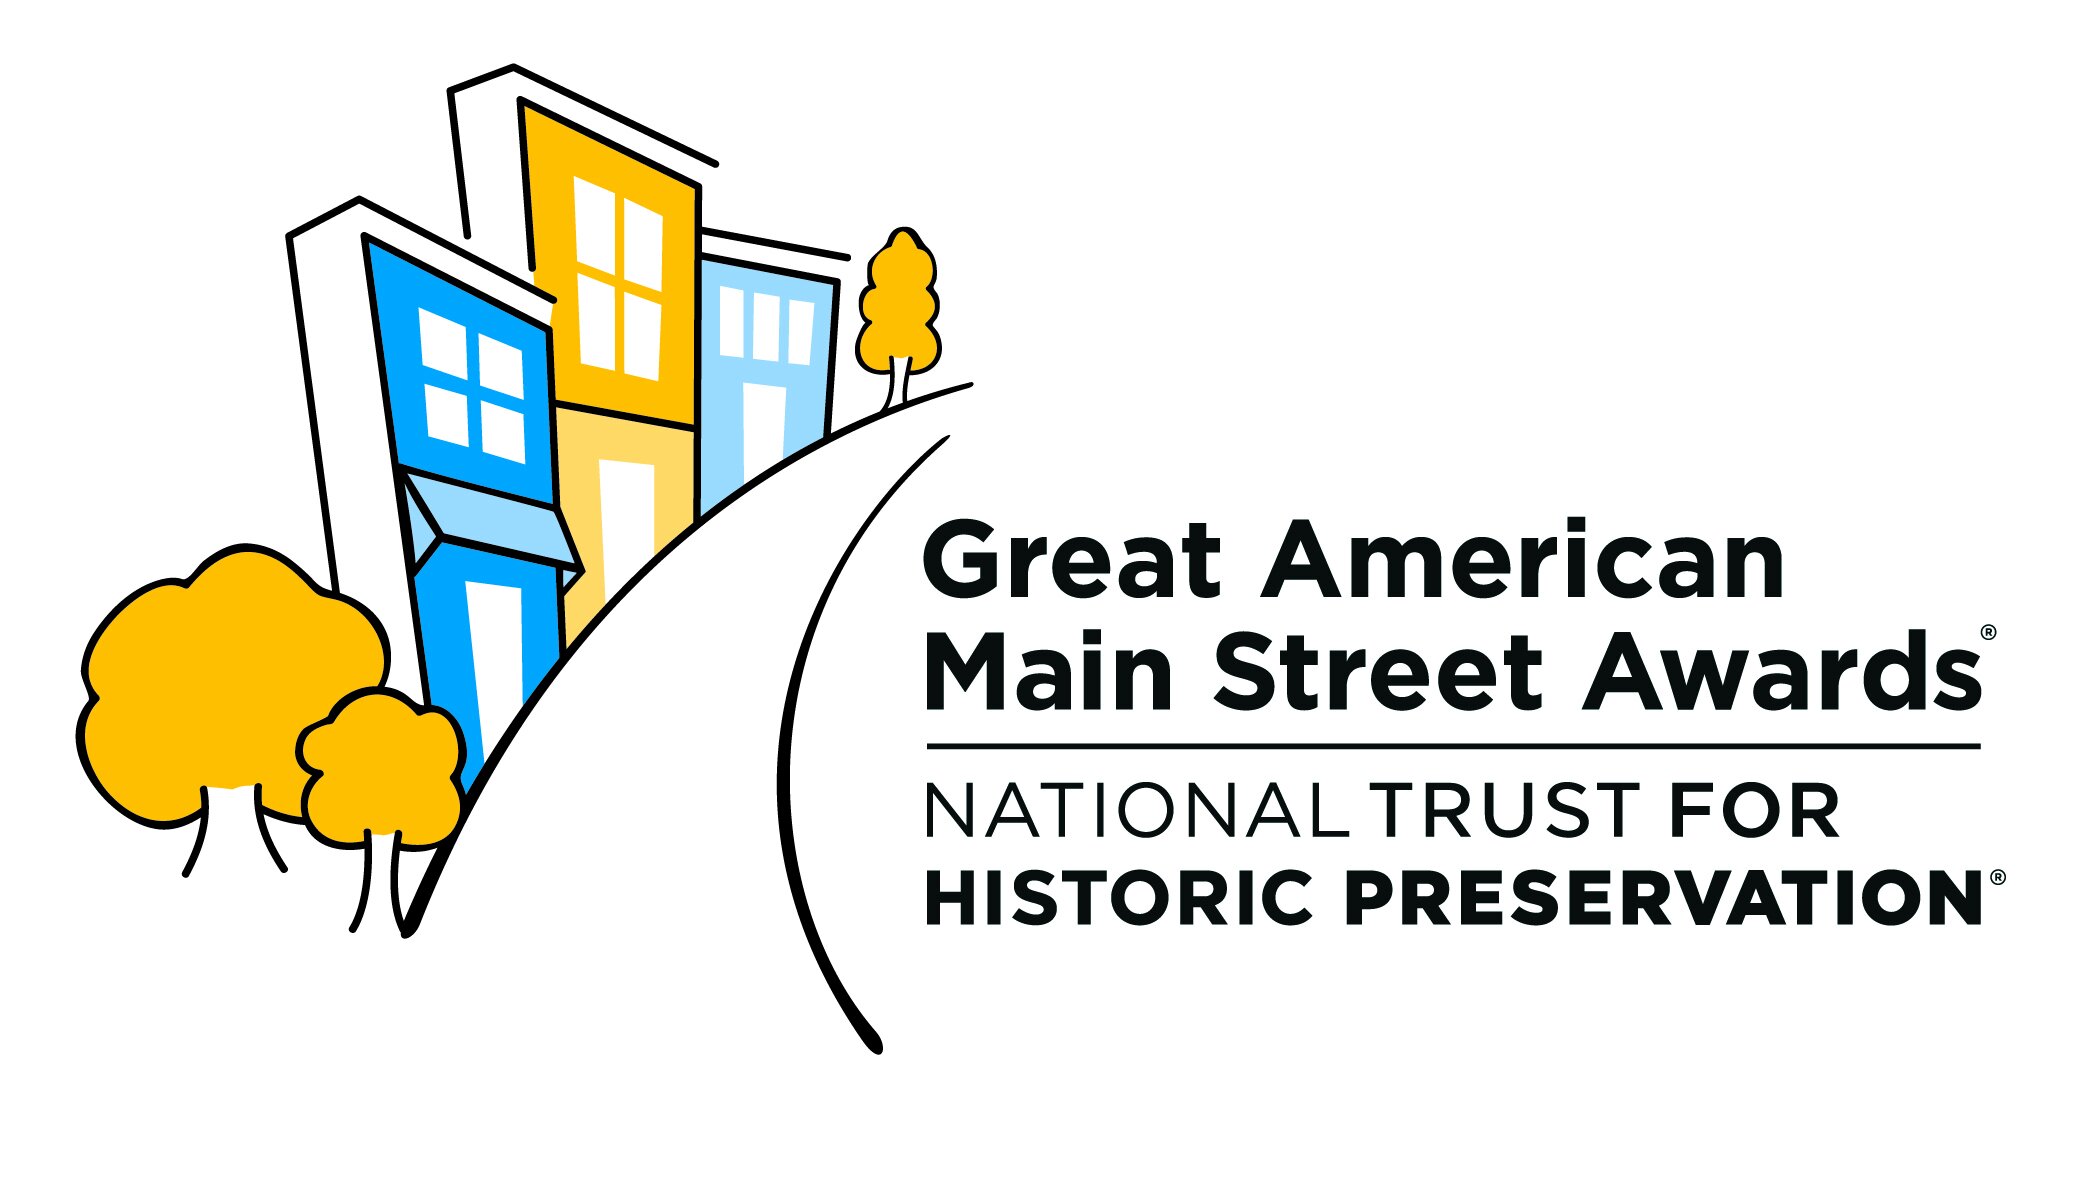 Great American Main Street Awards